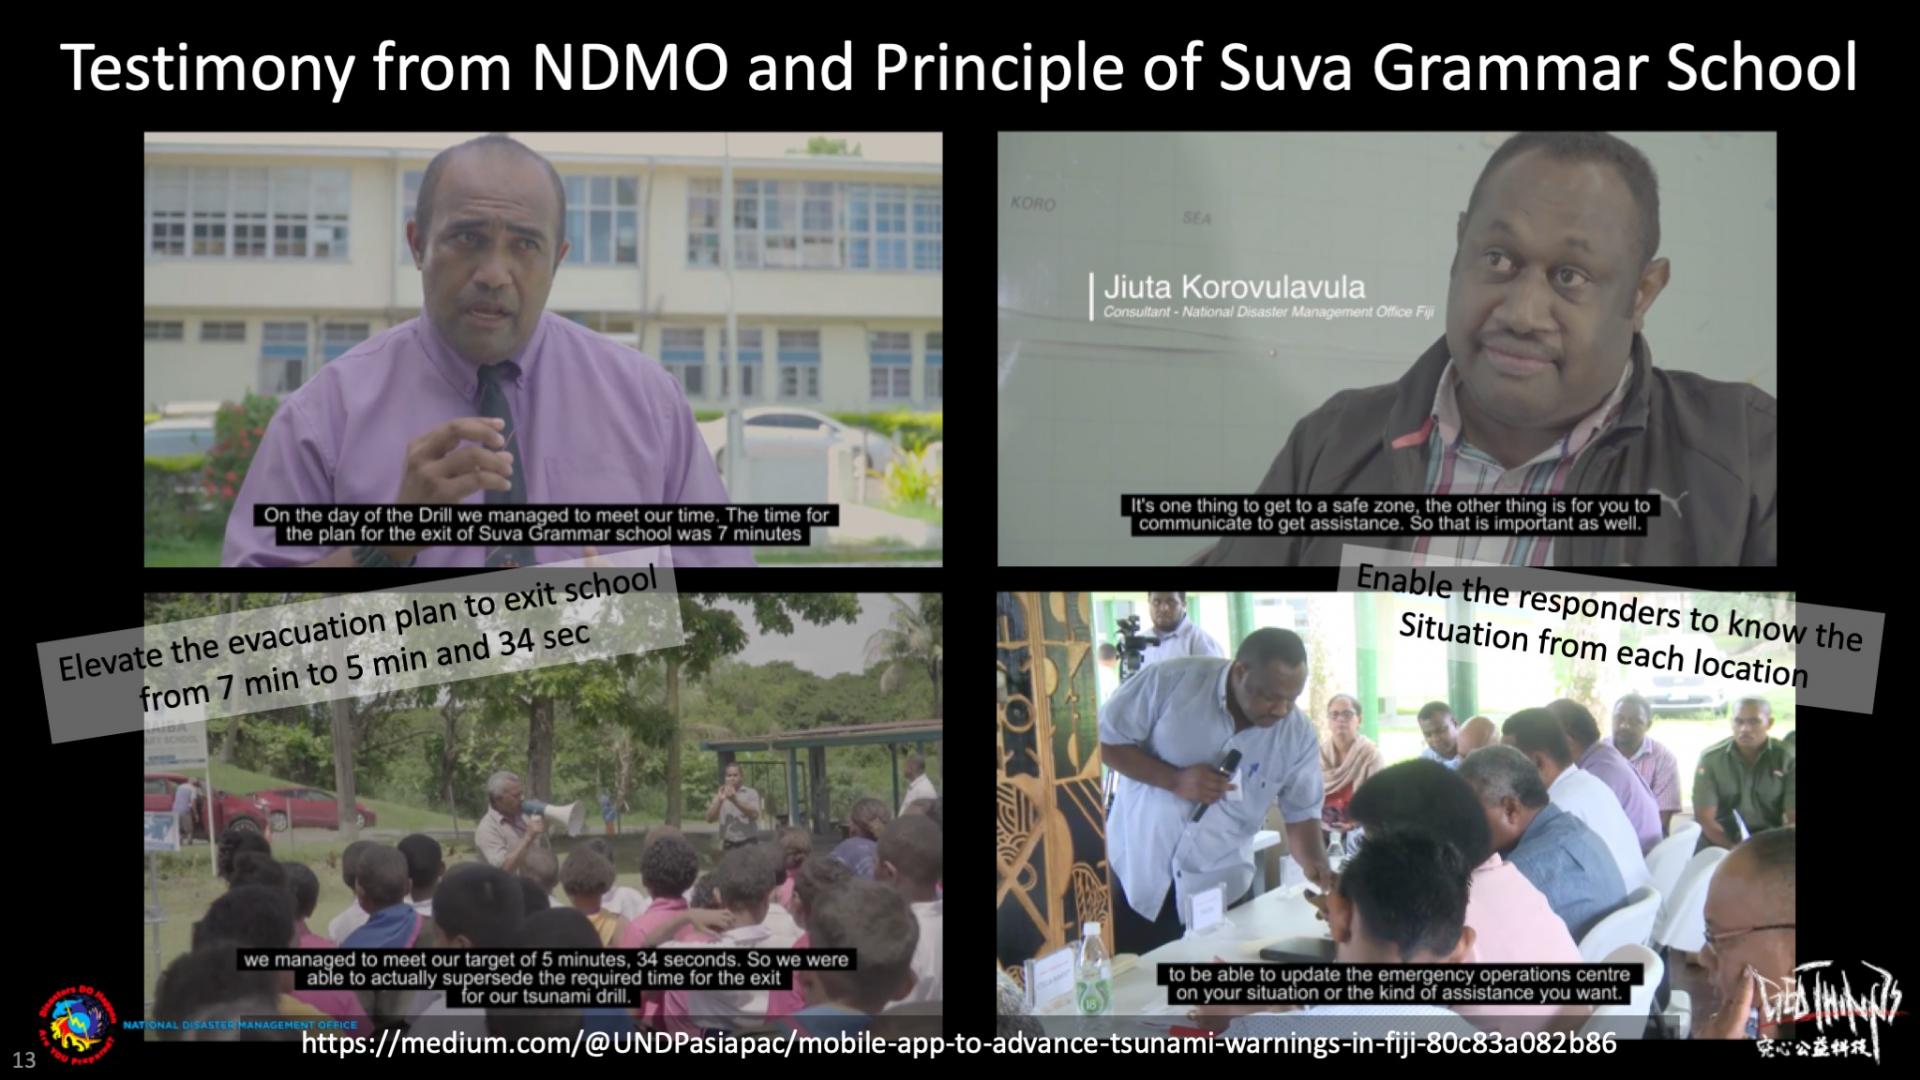 Testimony from NDMO and Principle of Suva Grammar School using geoBingAn